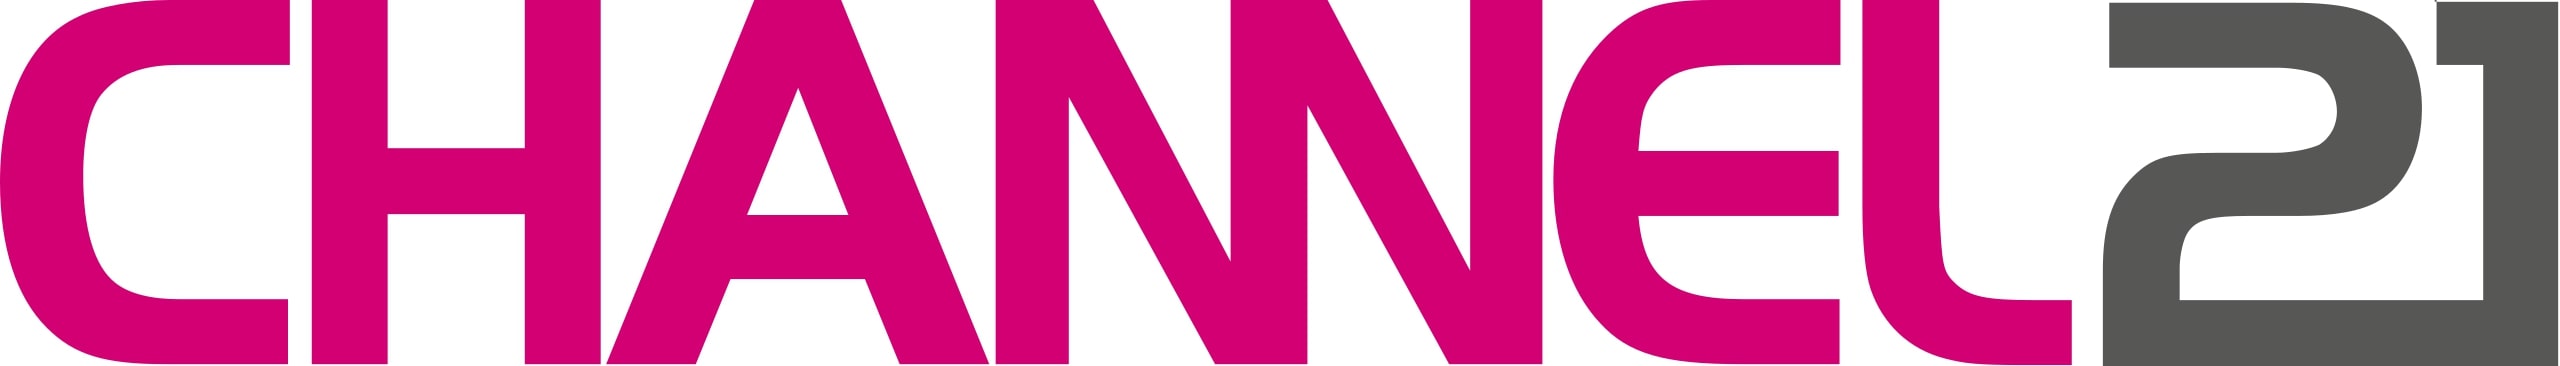 Canal logo. XXI логотип. Lis channel логотип. Логотипы медиакомпаний. Channel file